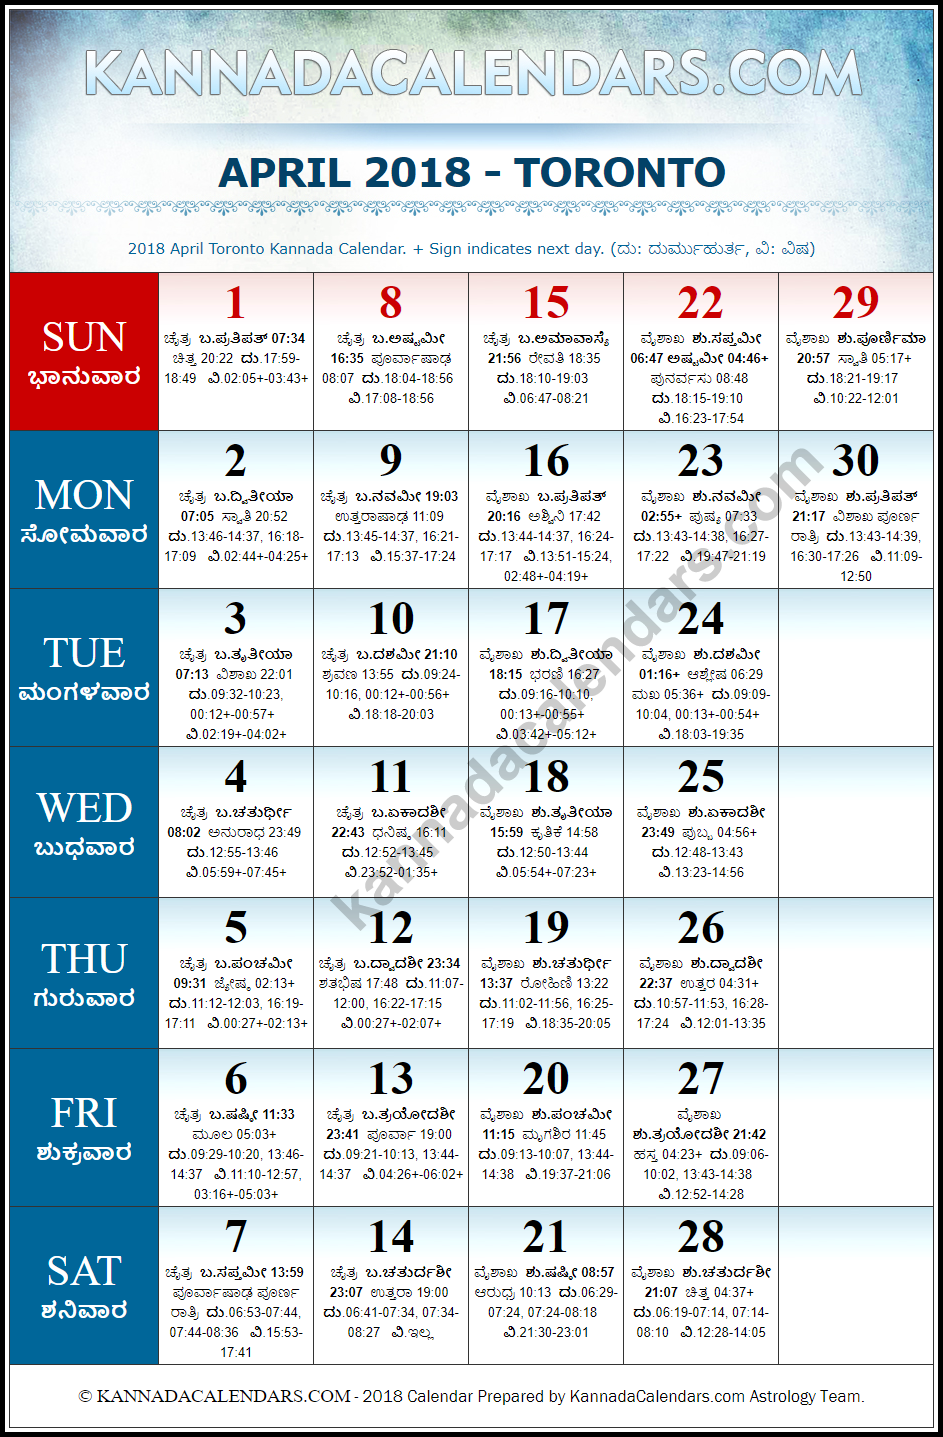 April 2018 Kannada Calendar for Toronto, Canada